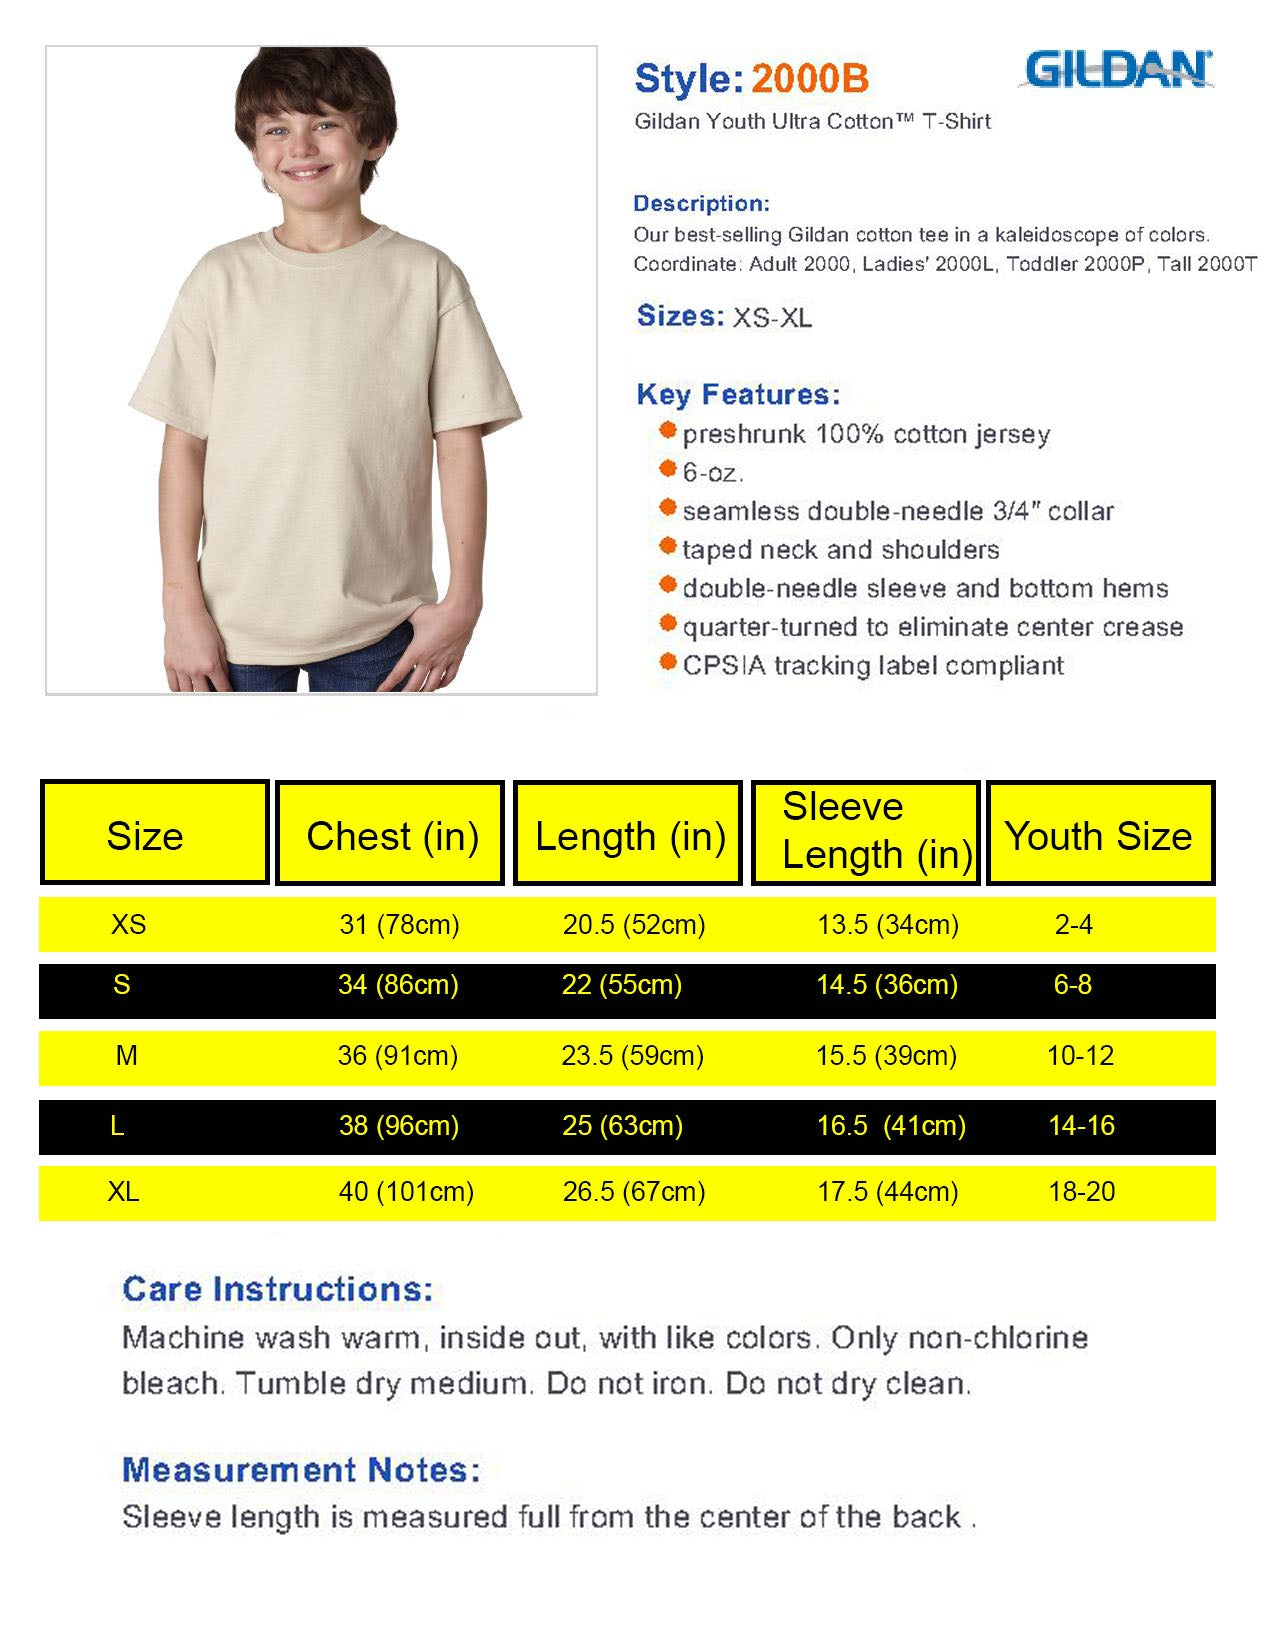 gildan 2000b kids tshirt size chart